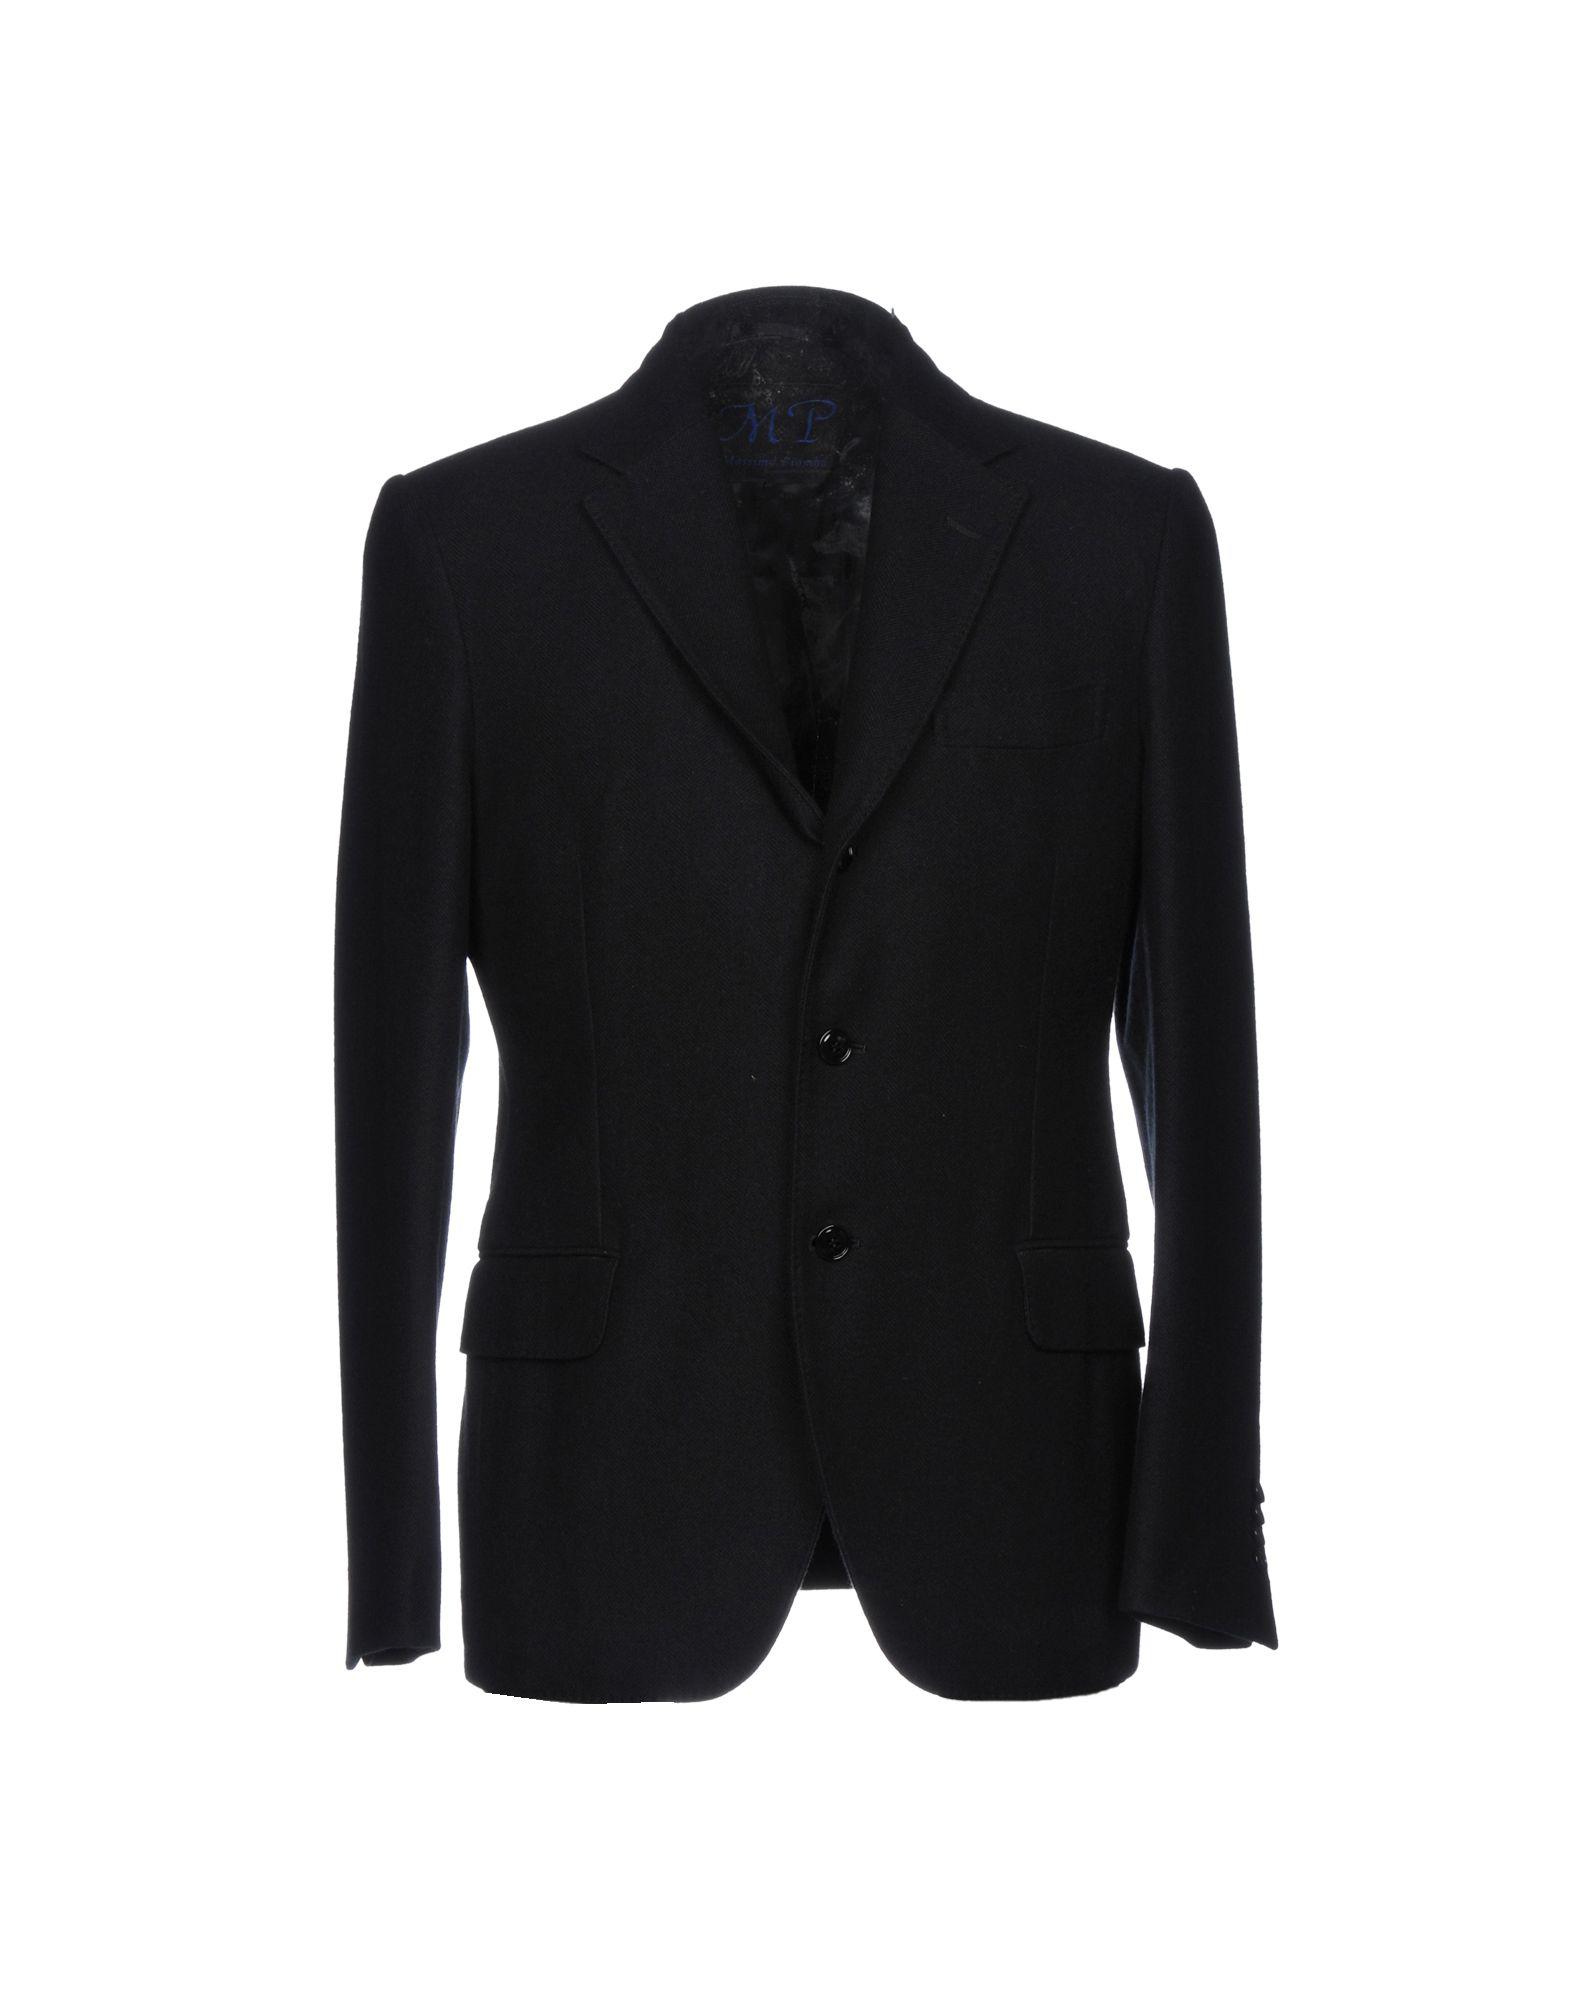 Mp Massimo Piombo Flannel Blazer in Black for Men - Lyst